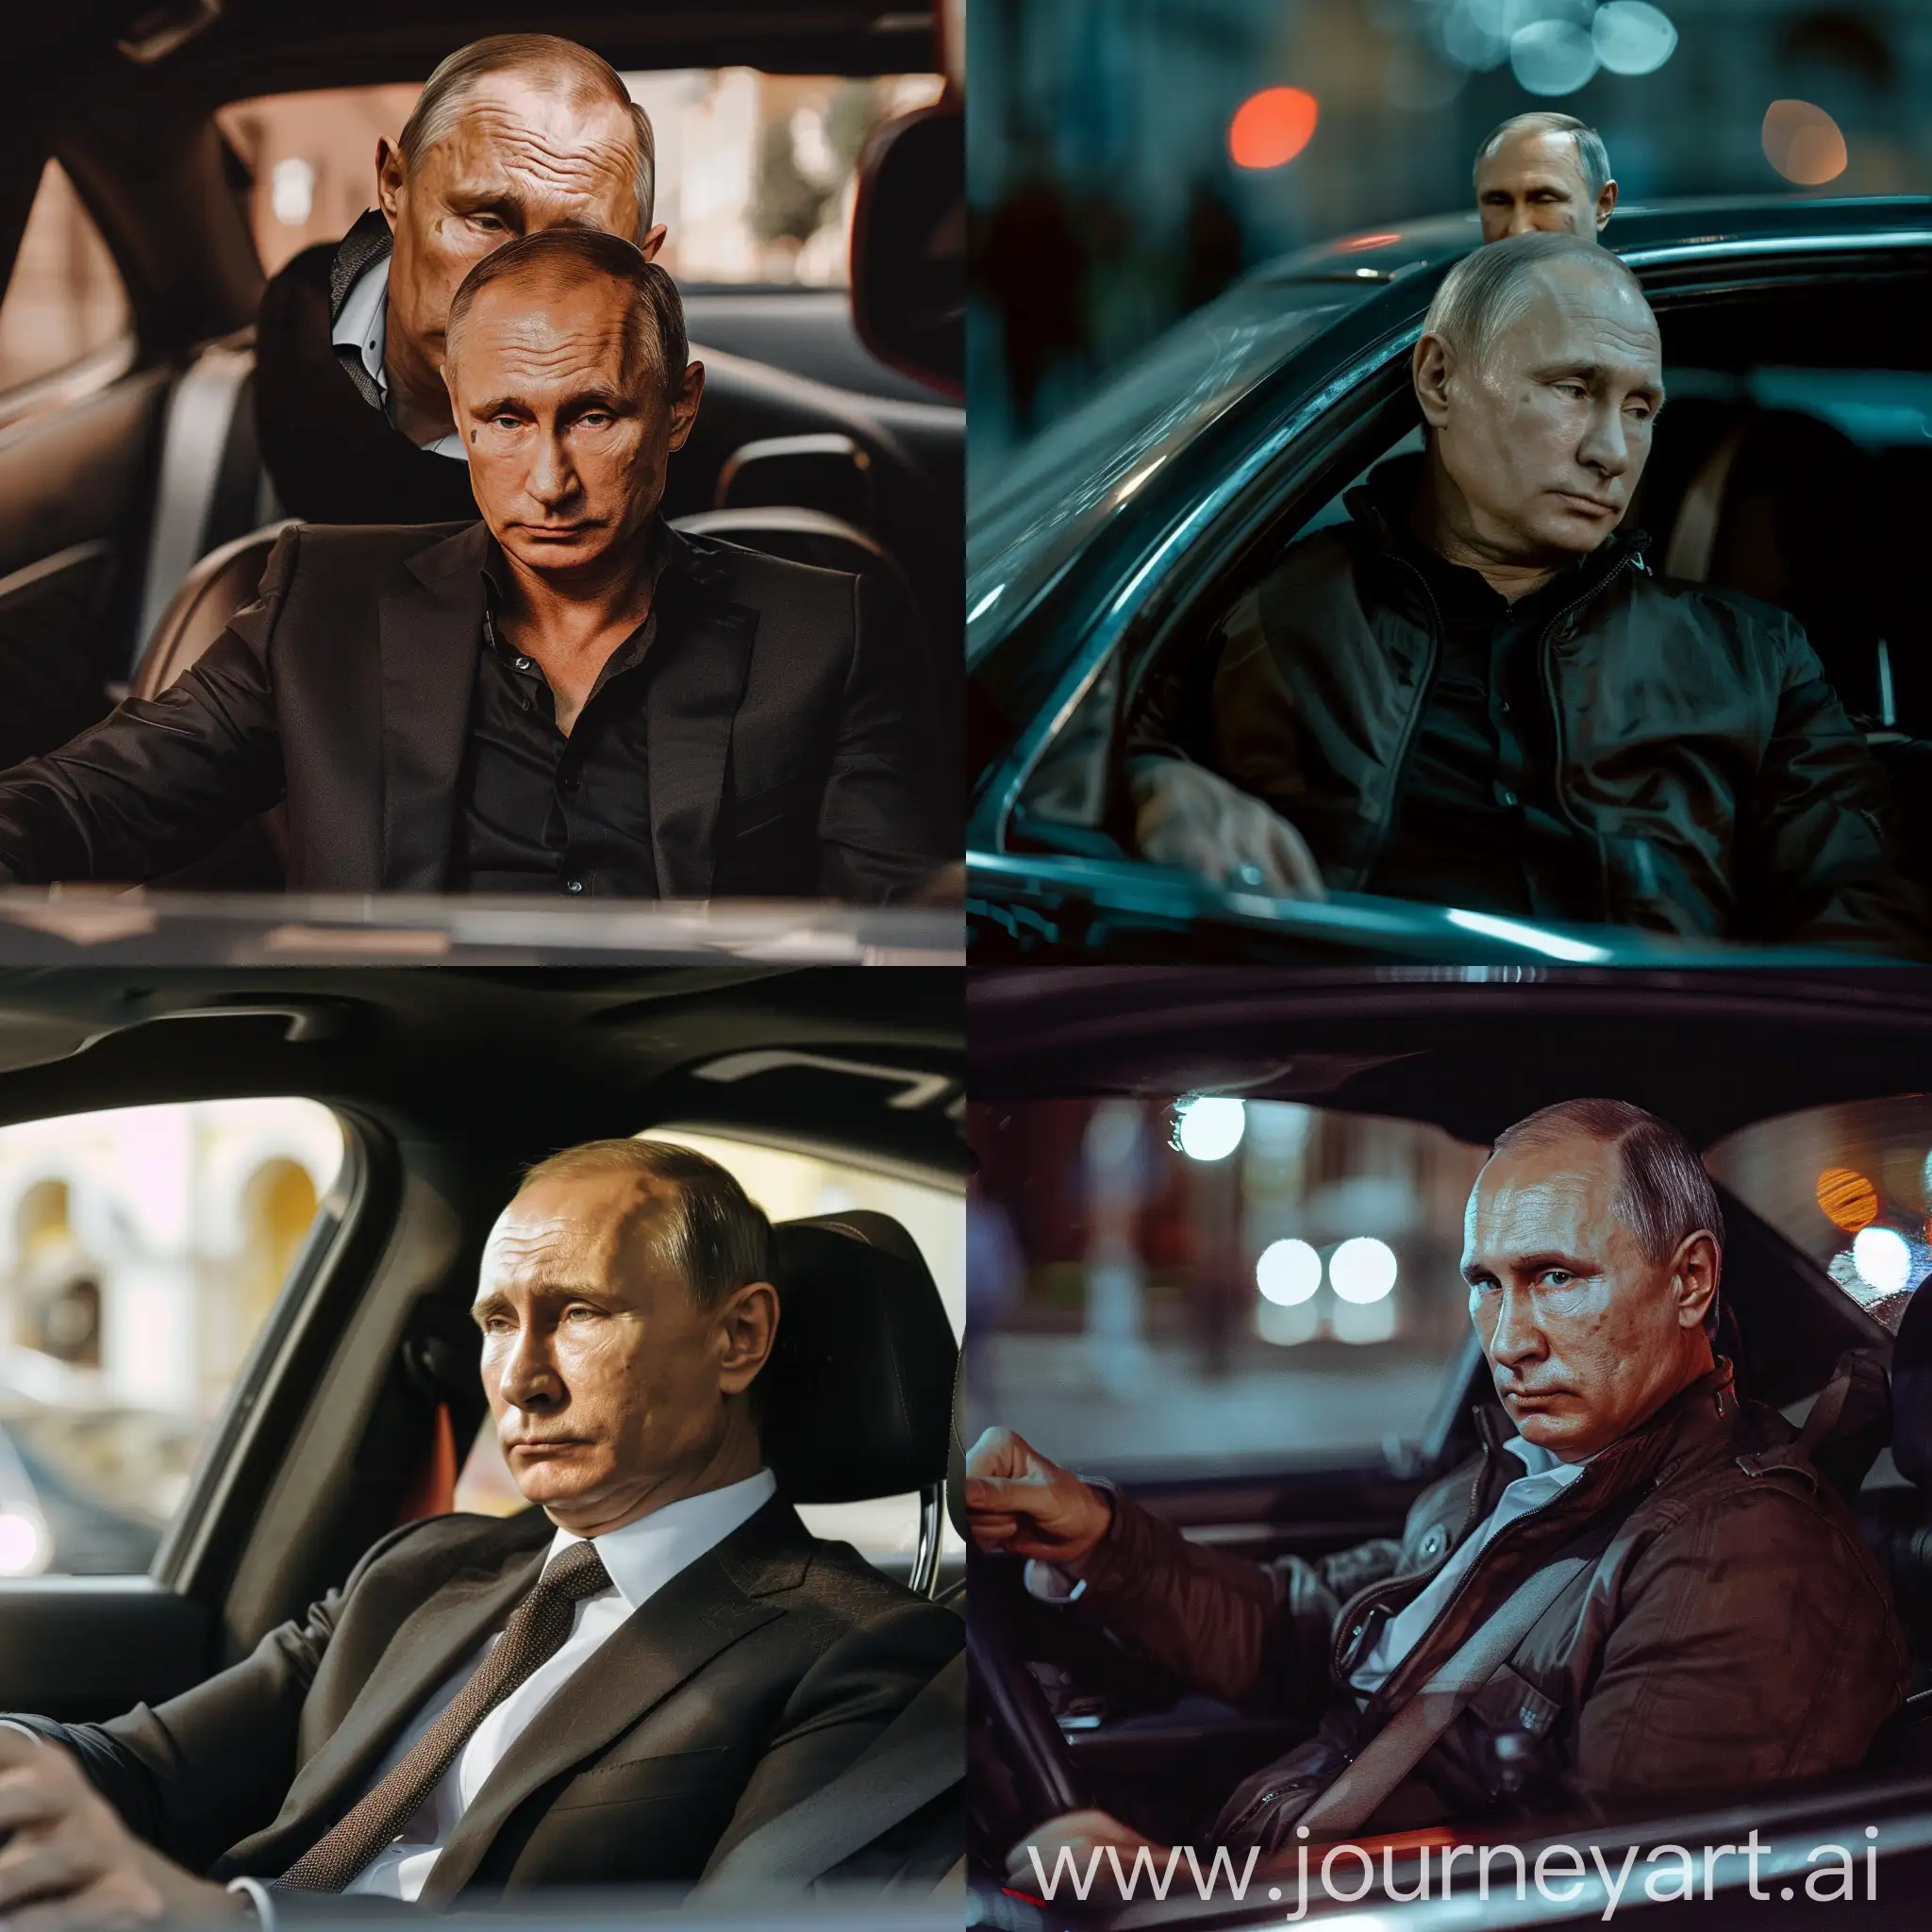 Vladimir-Putin-as-Dominic-Toretto-in-Fast-and-Furious-Car-Scene